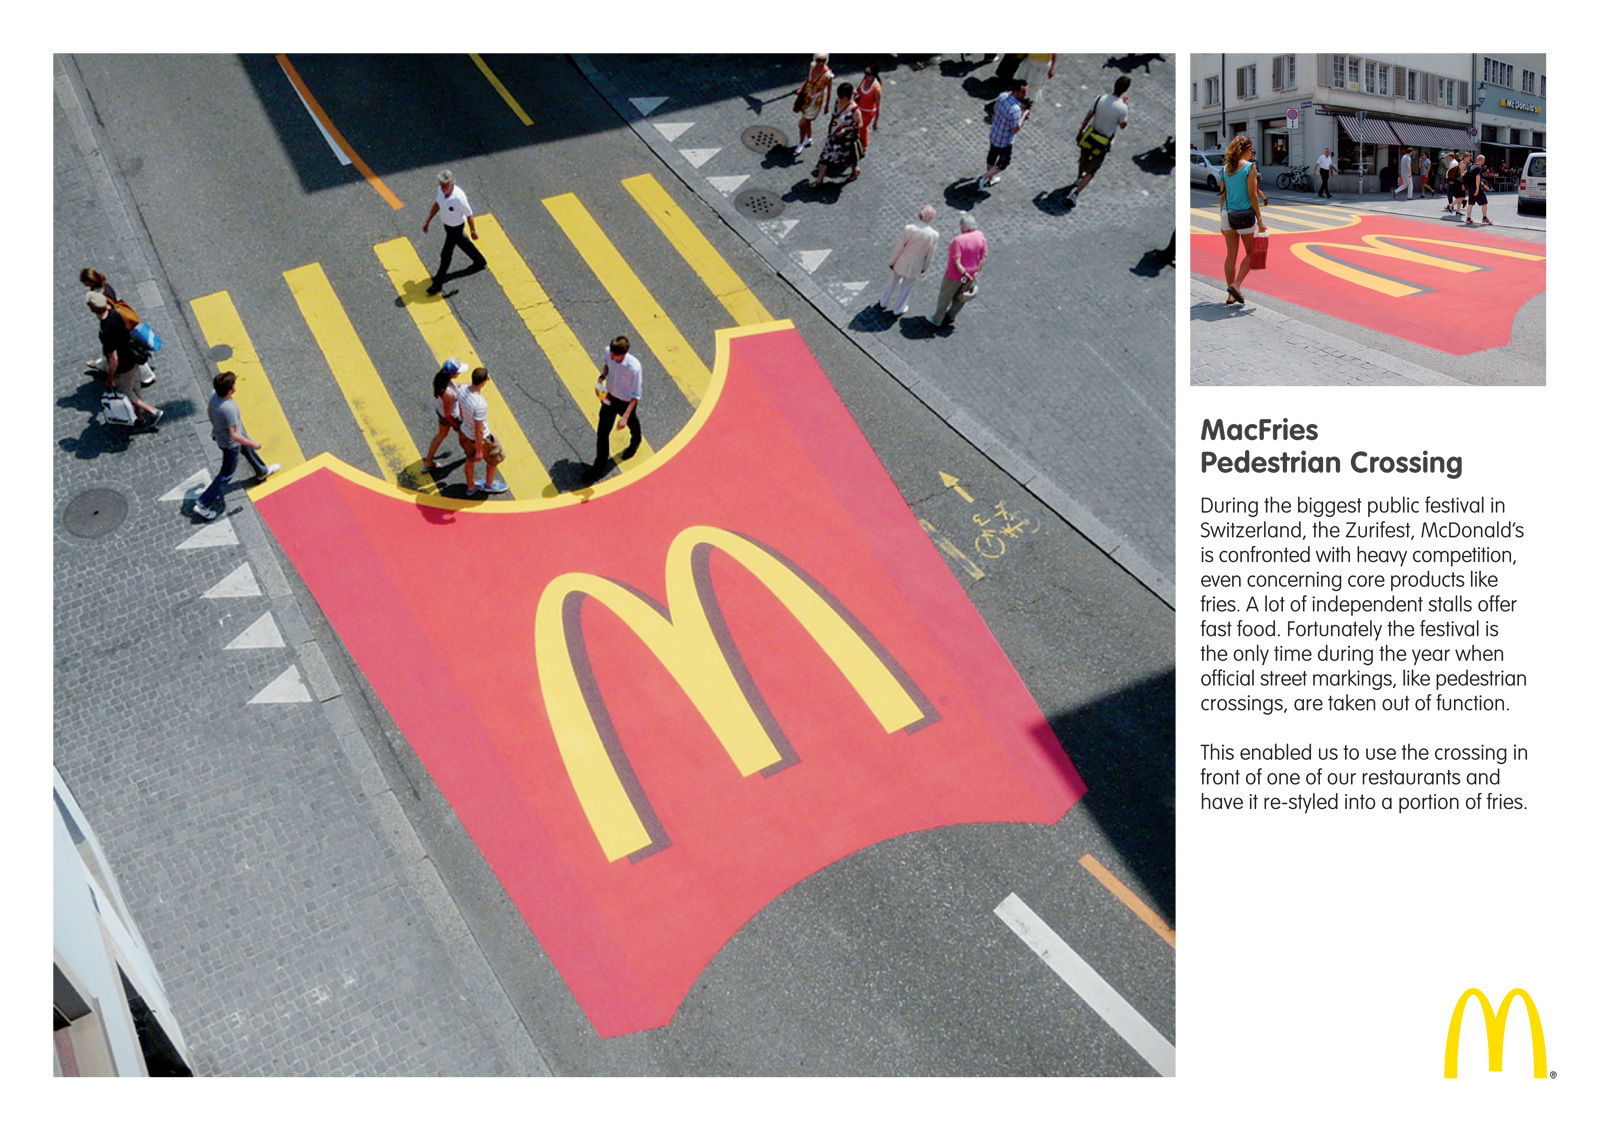 McDonald's: MacFries Pedestrian Walking